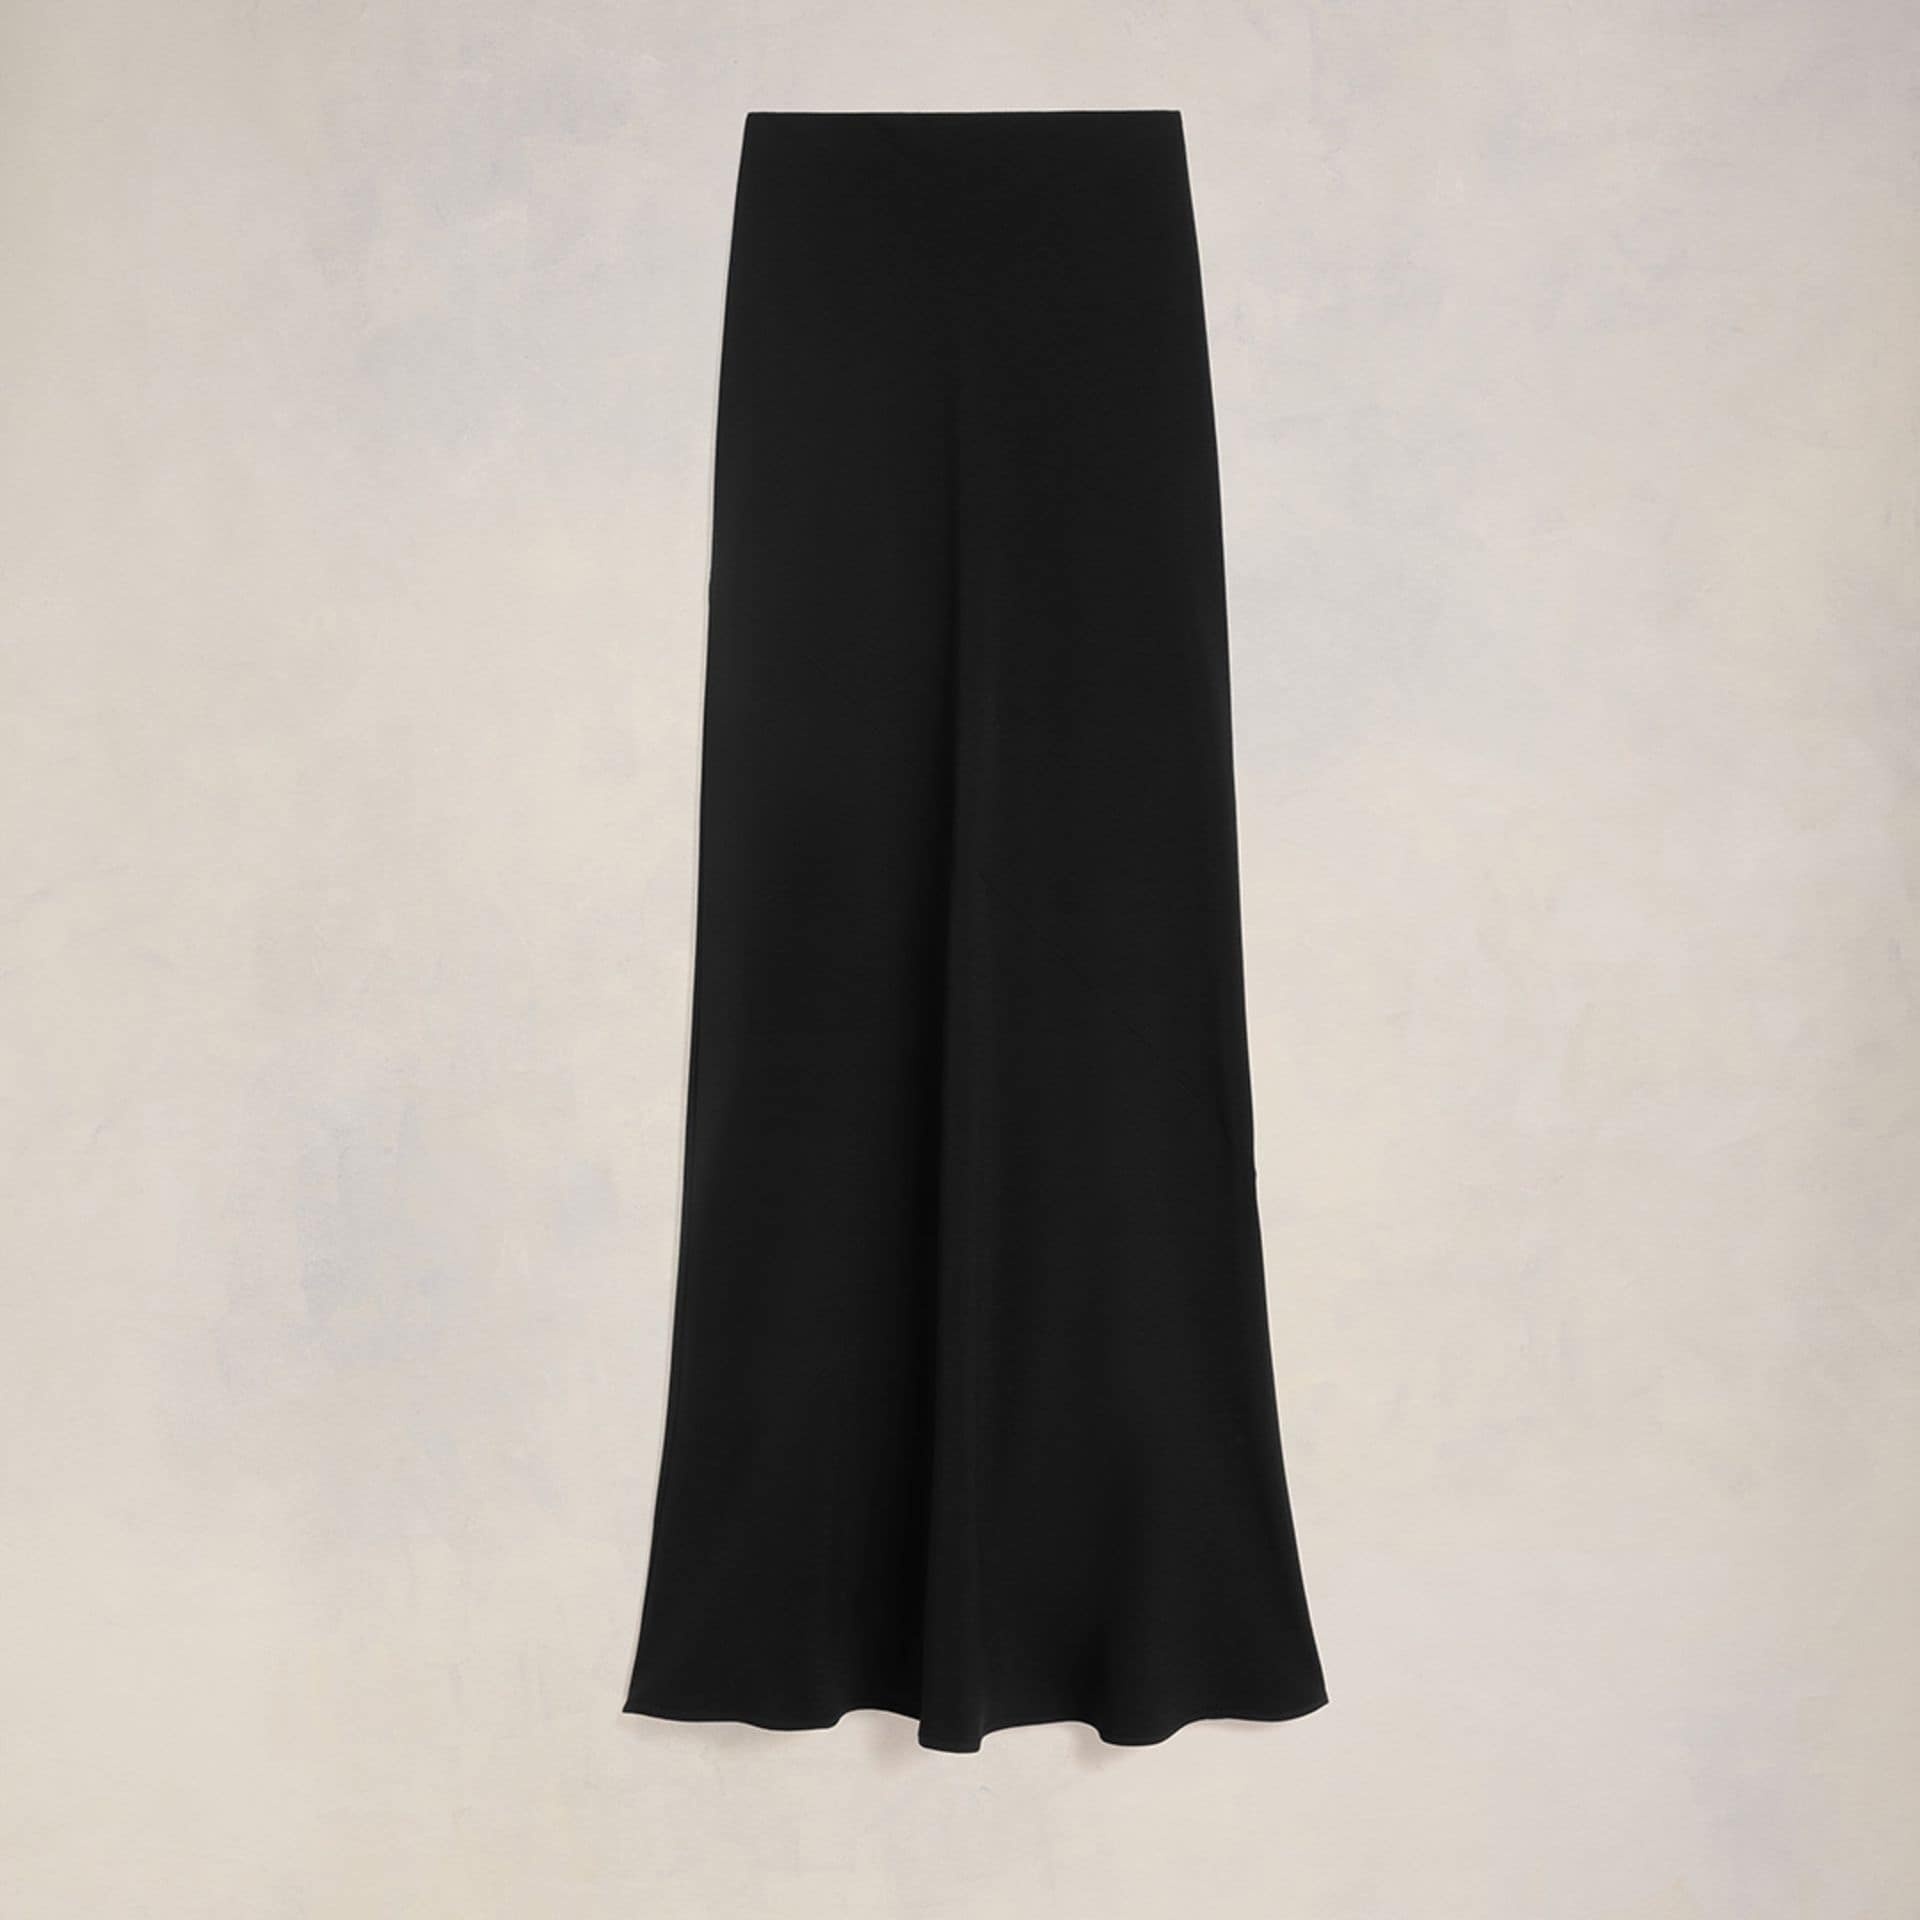 Long Skirt With Bias Cut - 2